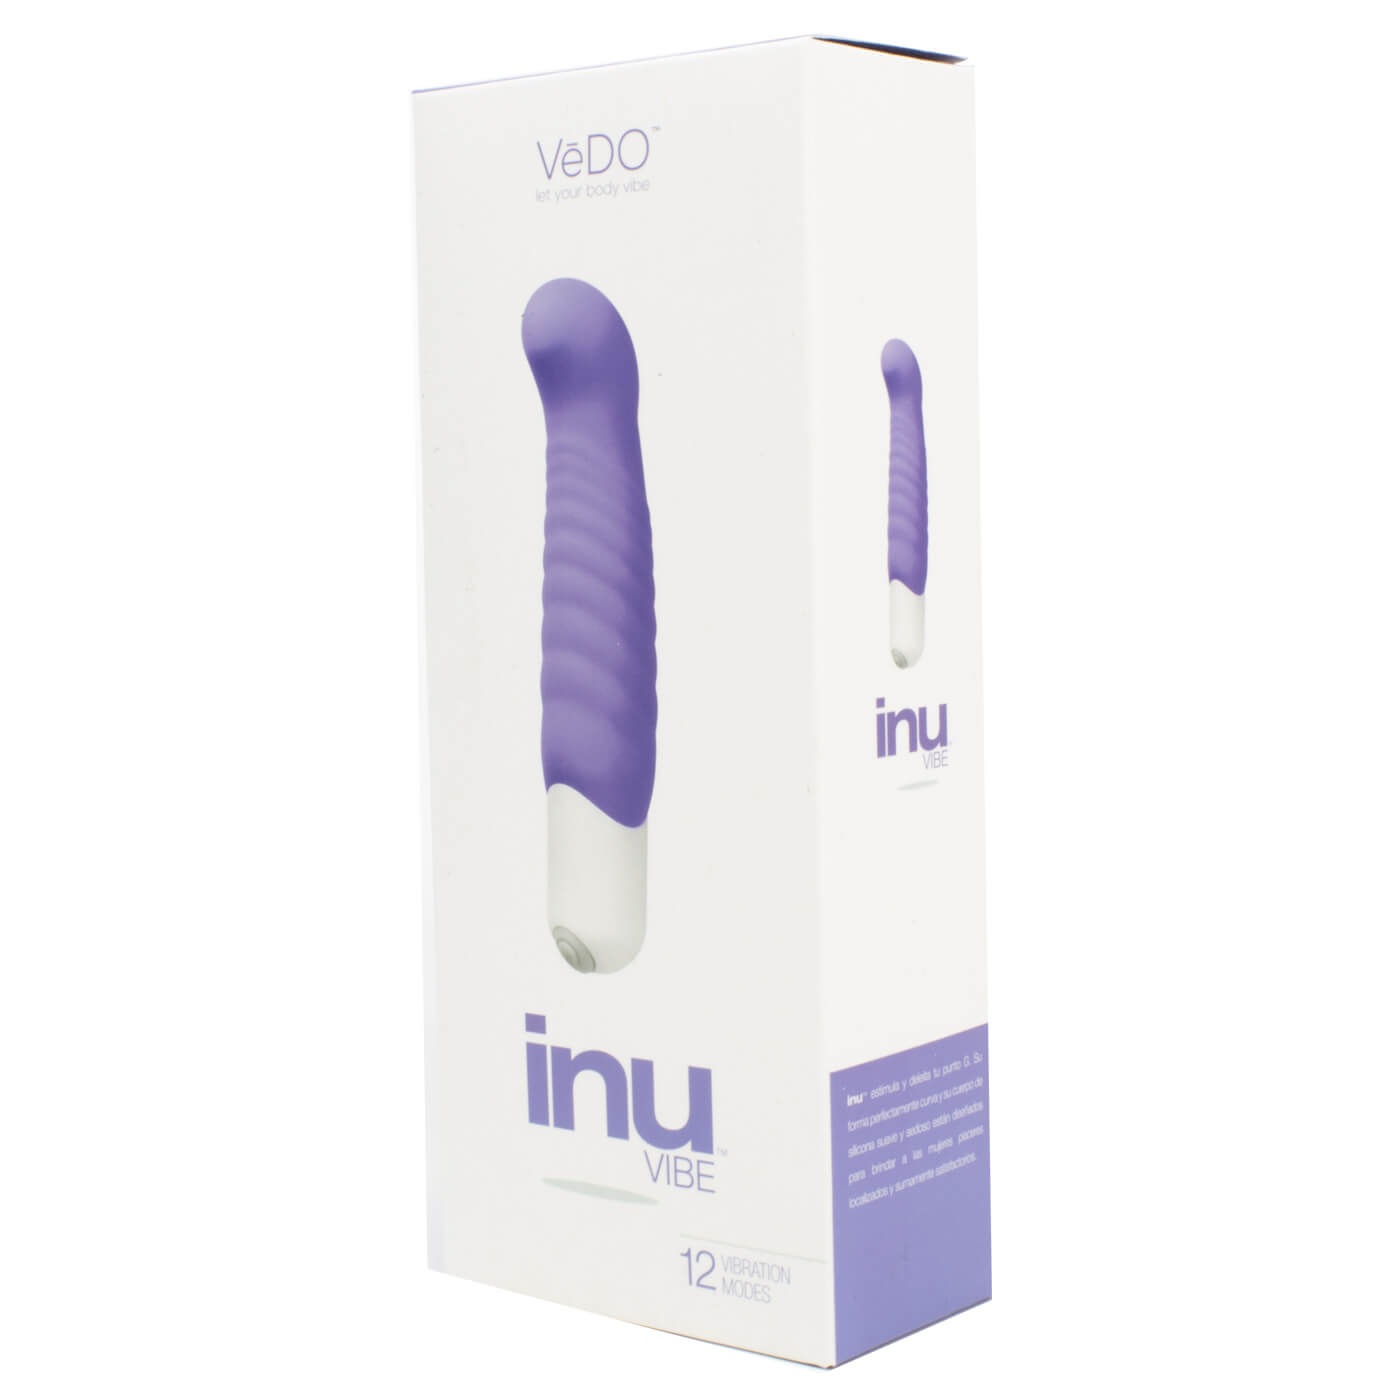 Vedo Inu Extra Quiet 12 Function Powerful G-Spot Vibrator